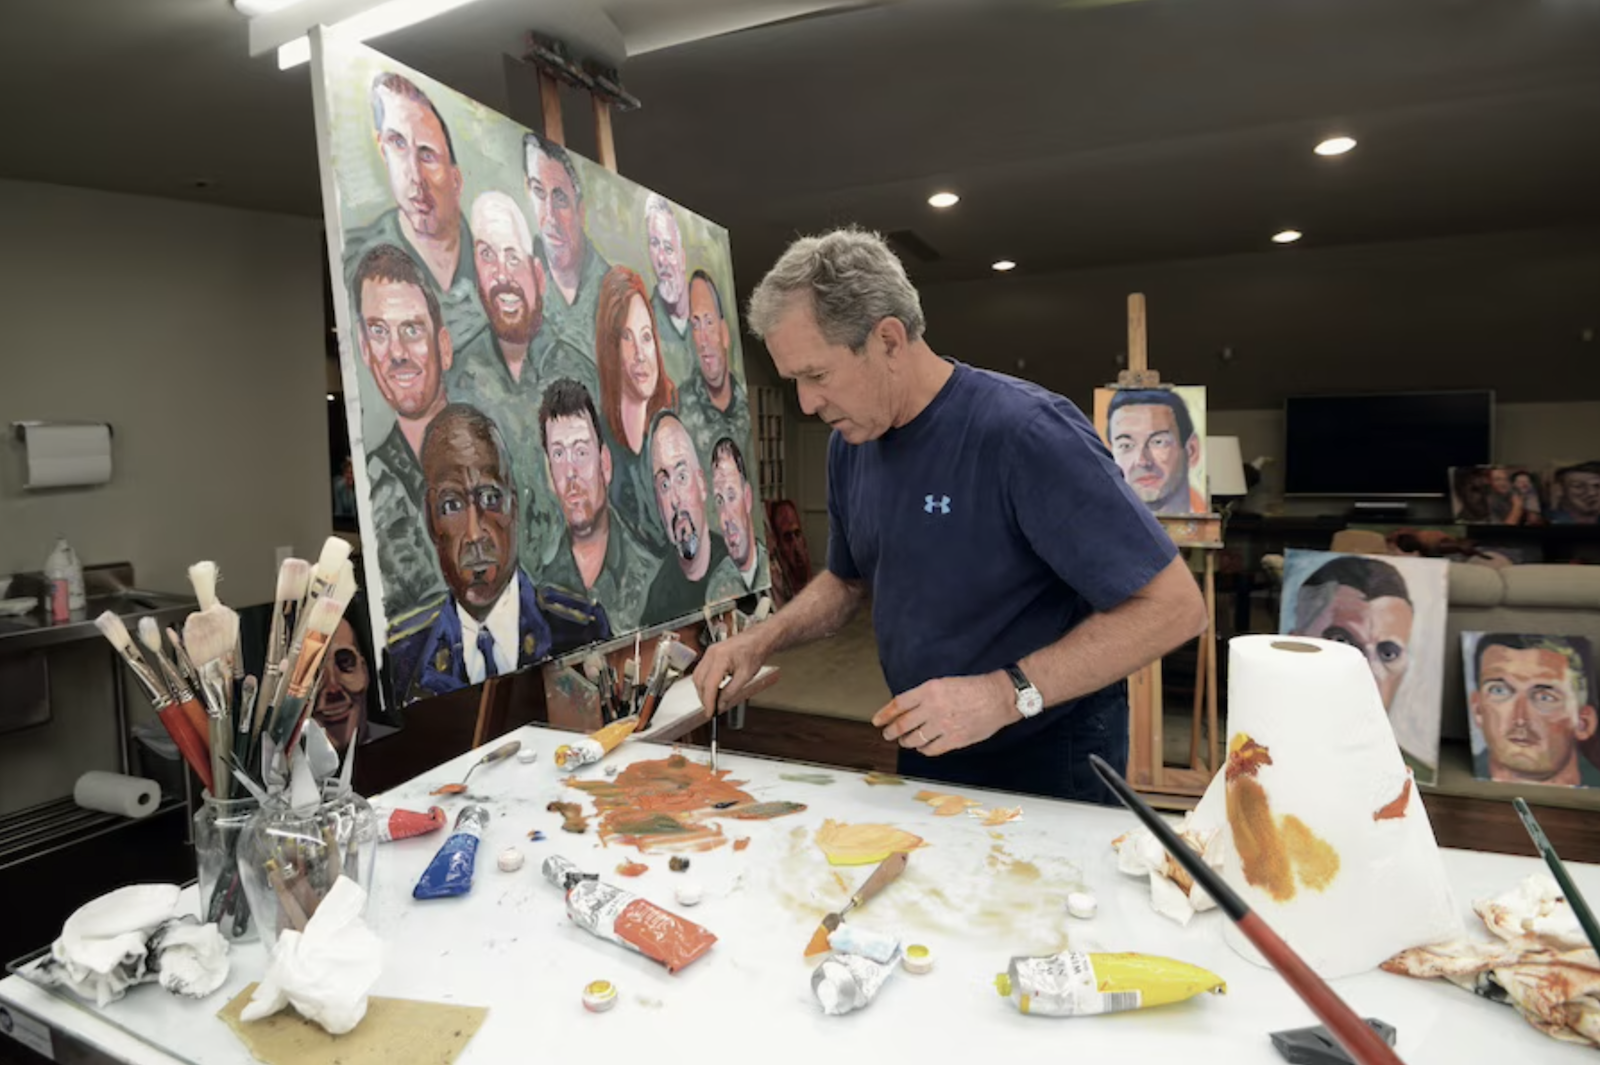 President Bush working on veteran portaits